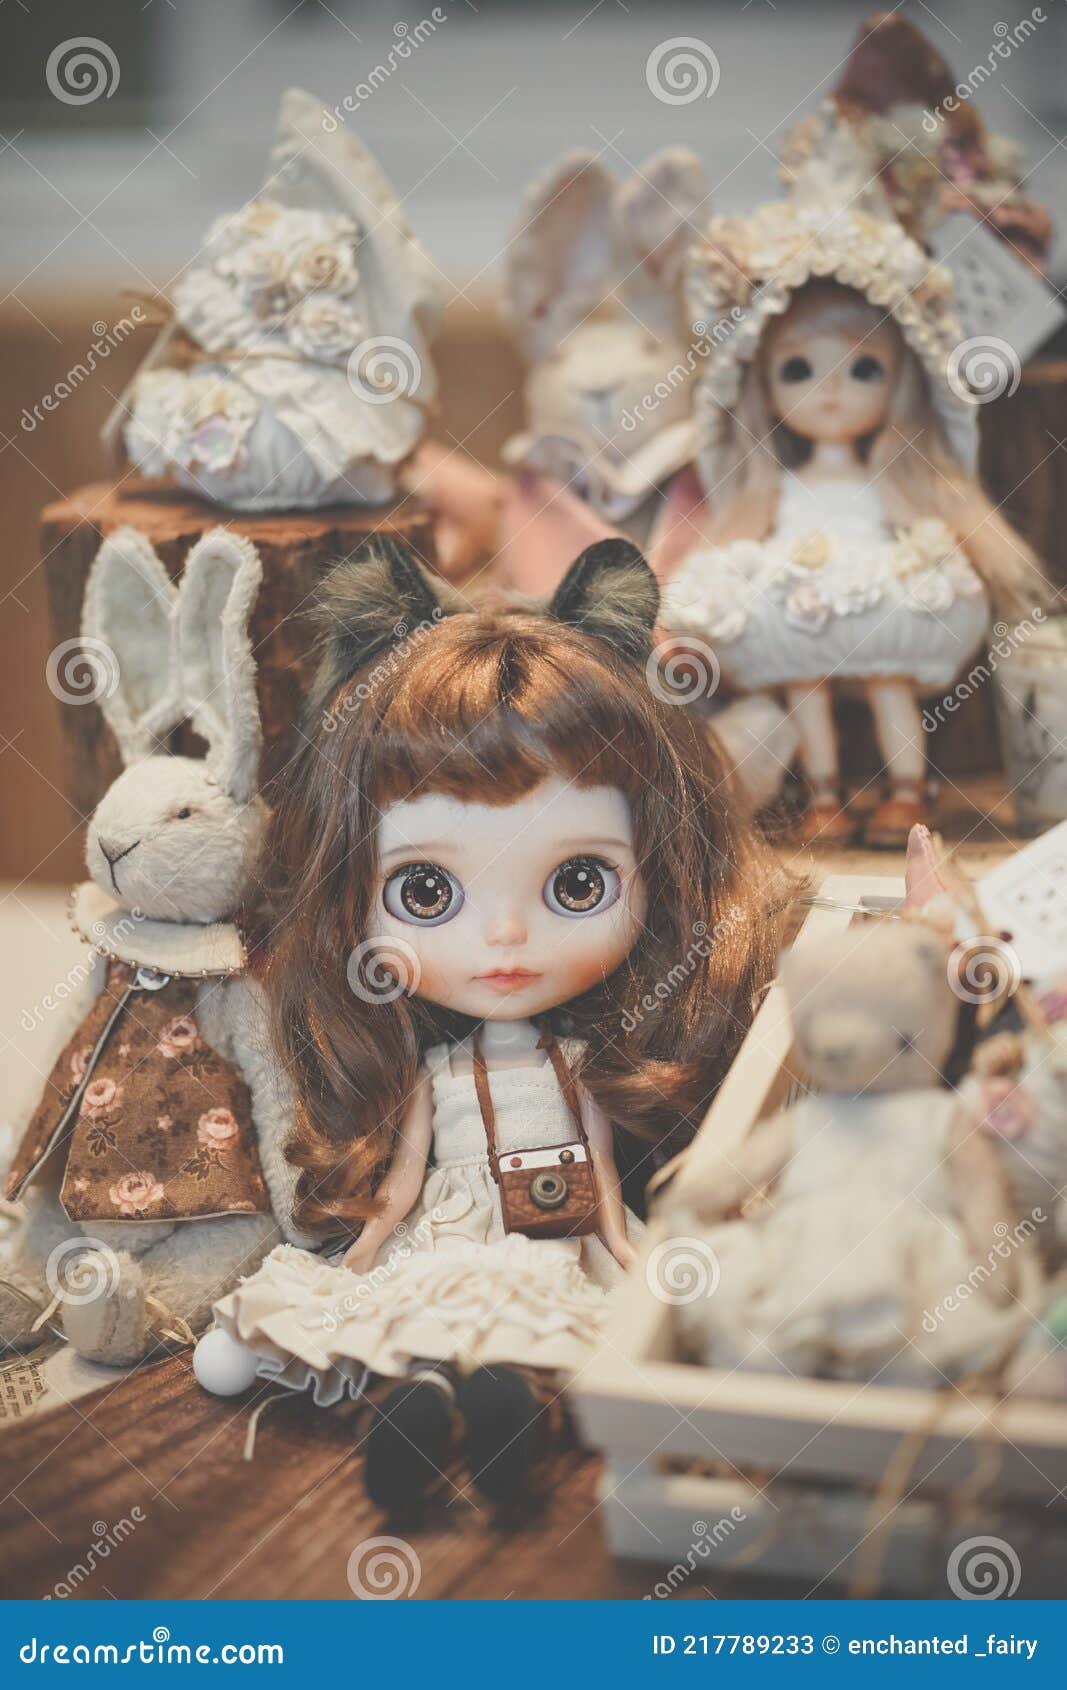 Blythe doll shirt depicting a white bunny